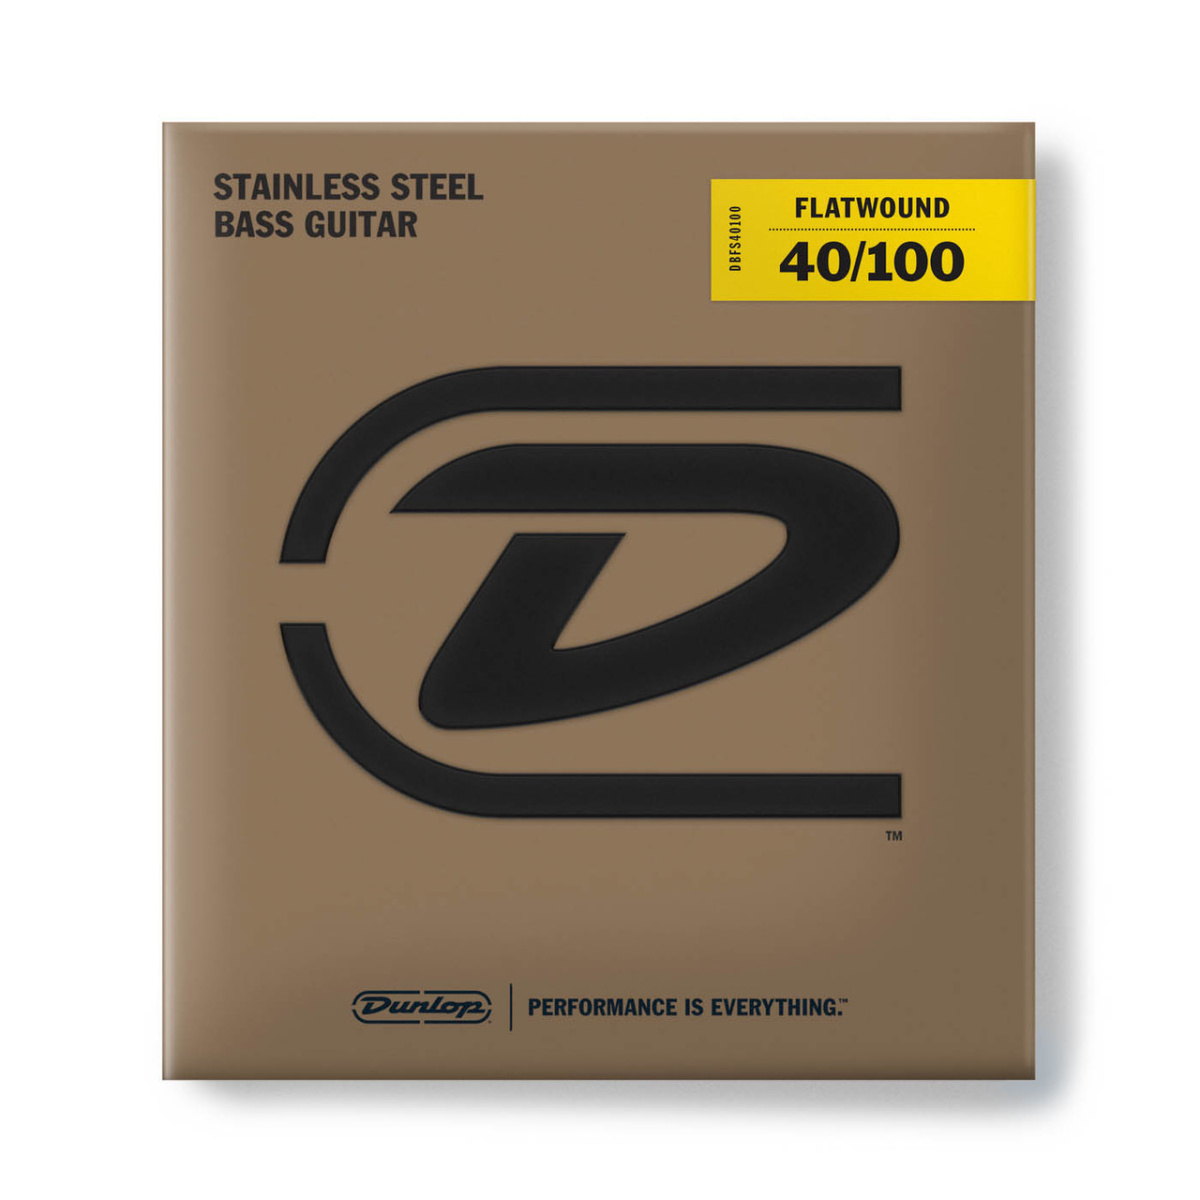 Dunlop DBFS40100M Flatwound Medium Scale Комплект струн для бас-гитары, сталь, 40-100.